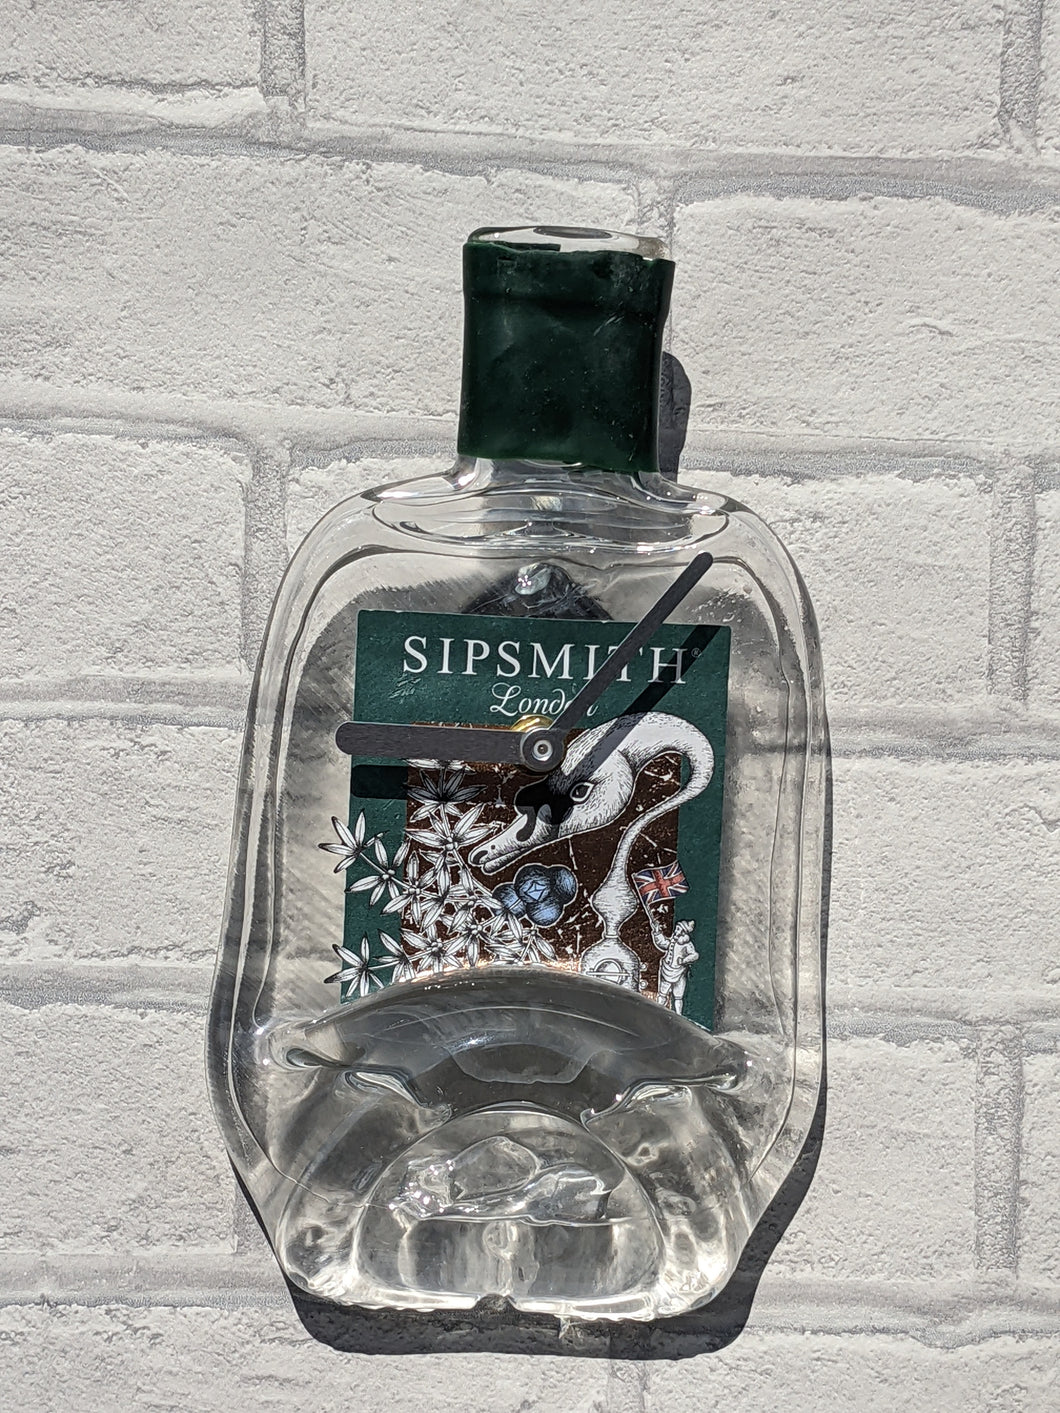 Sipsmith gin bottle clock